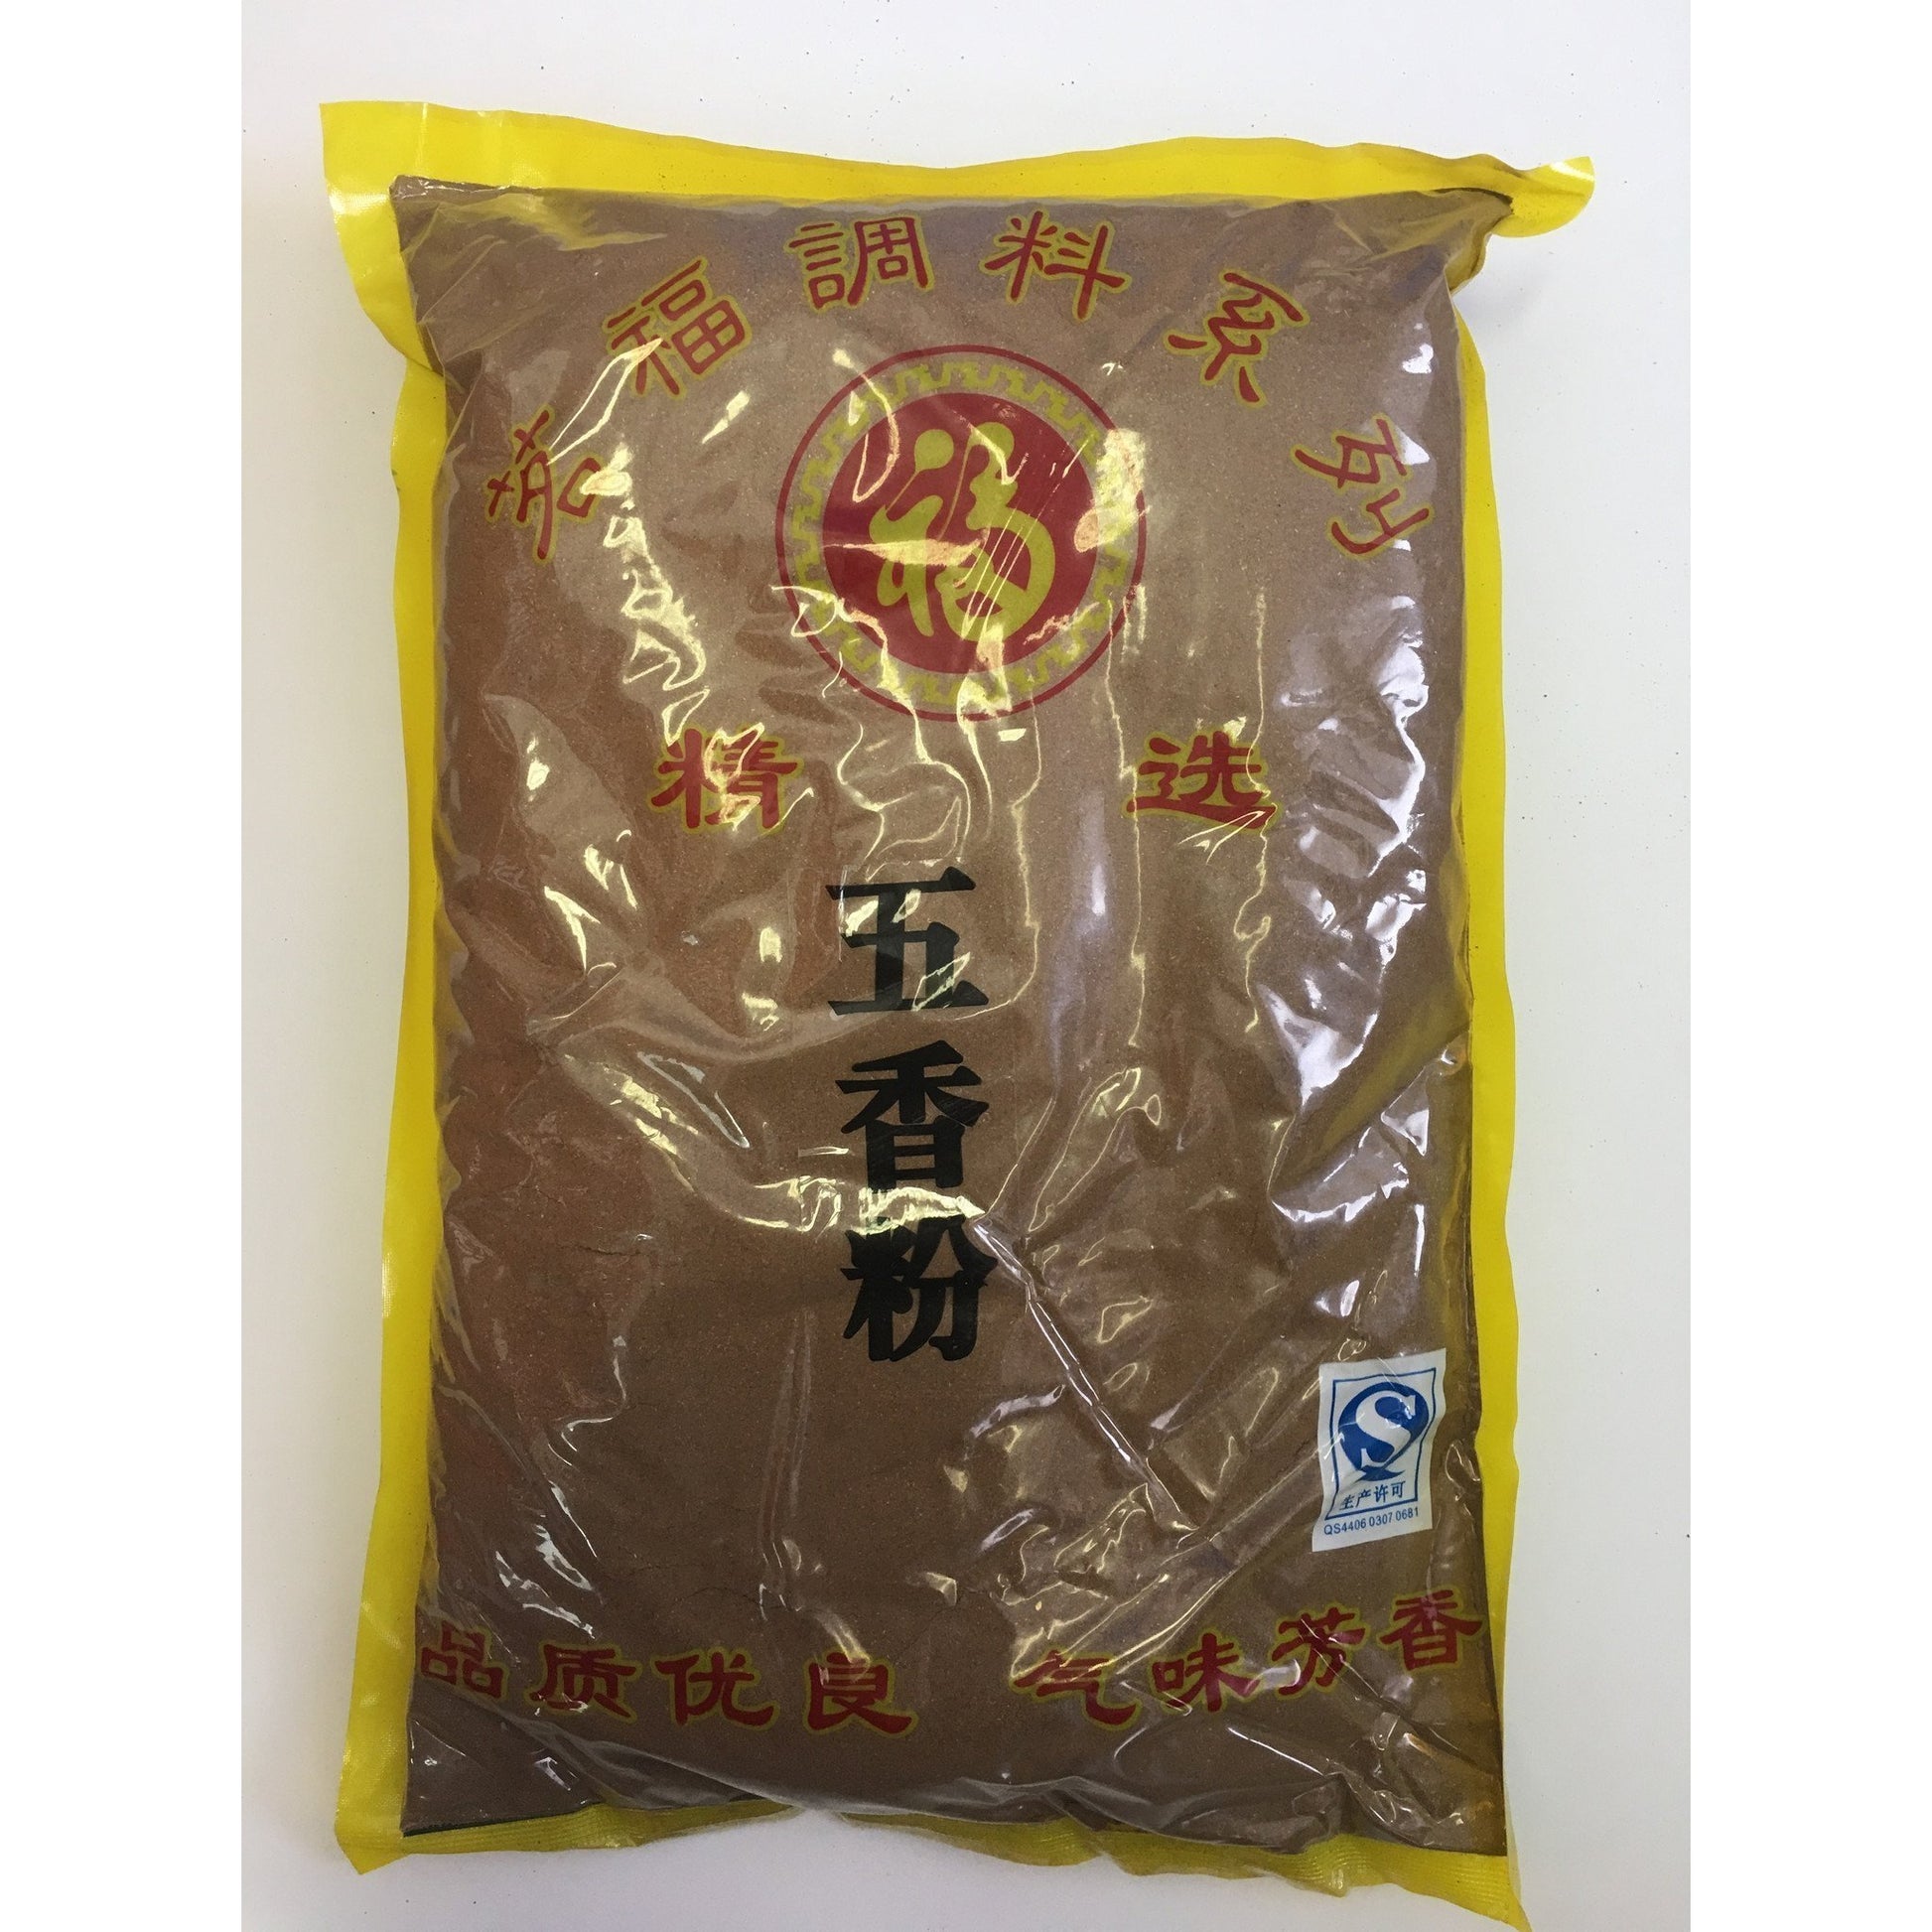 PD037K Ming Fu Brand - Five Spices Powder 1kg - 25 bags / 1CTN - New Eastland Pty Ltd - Asian food wholesalers